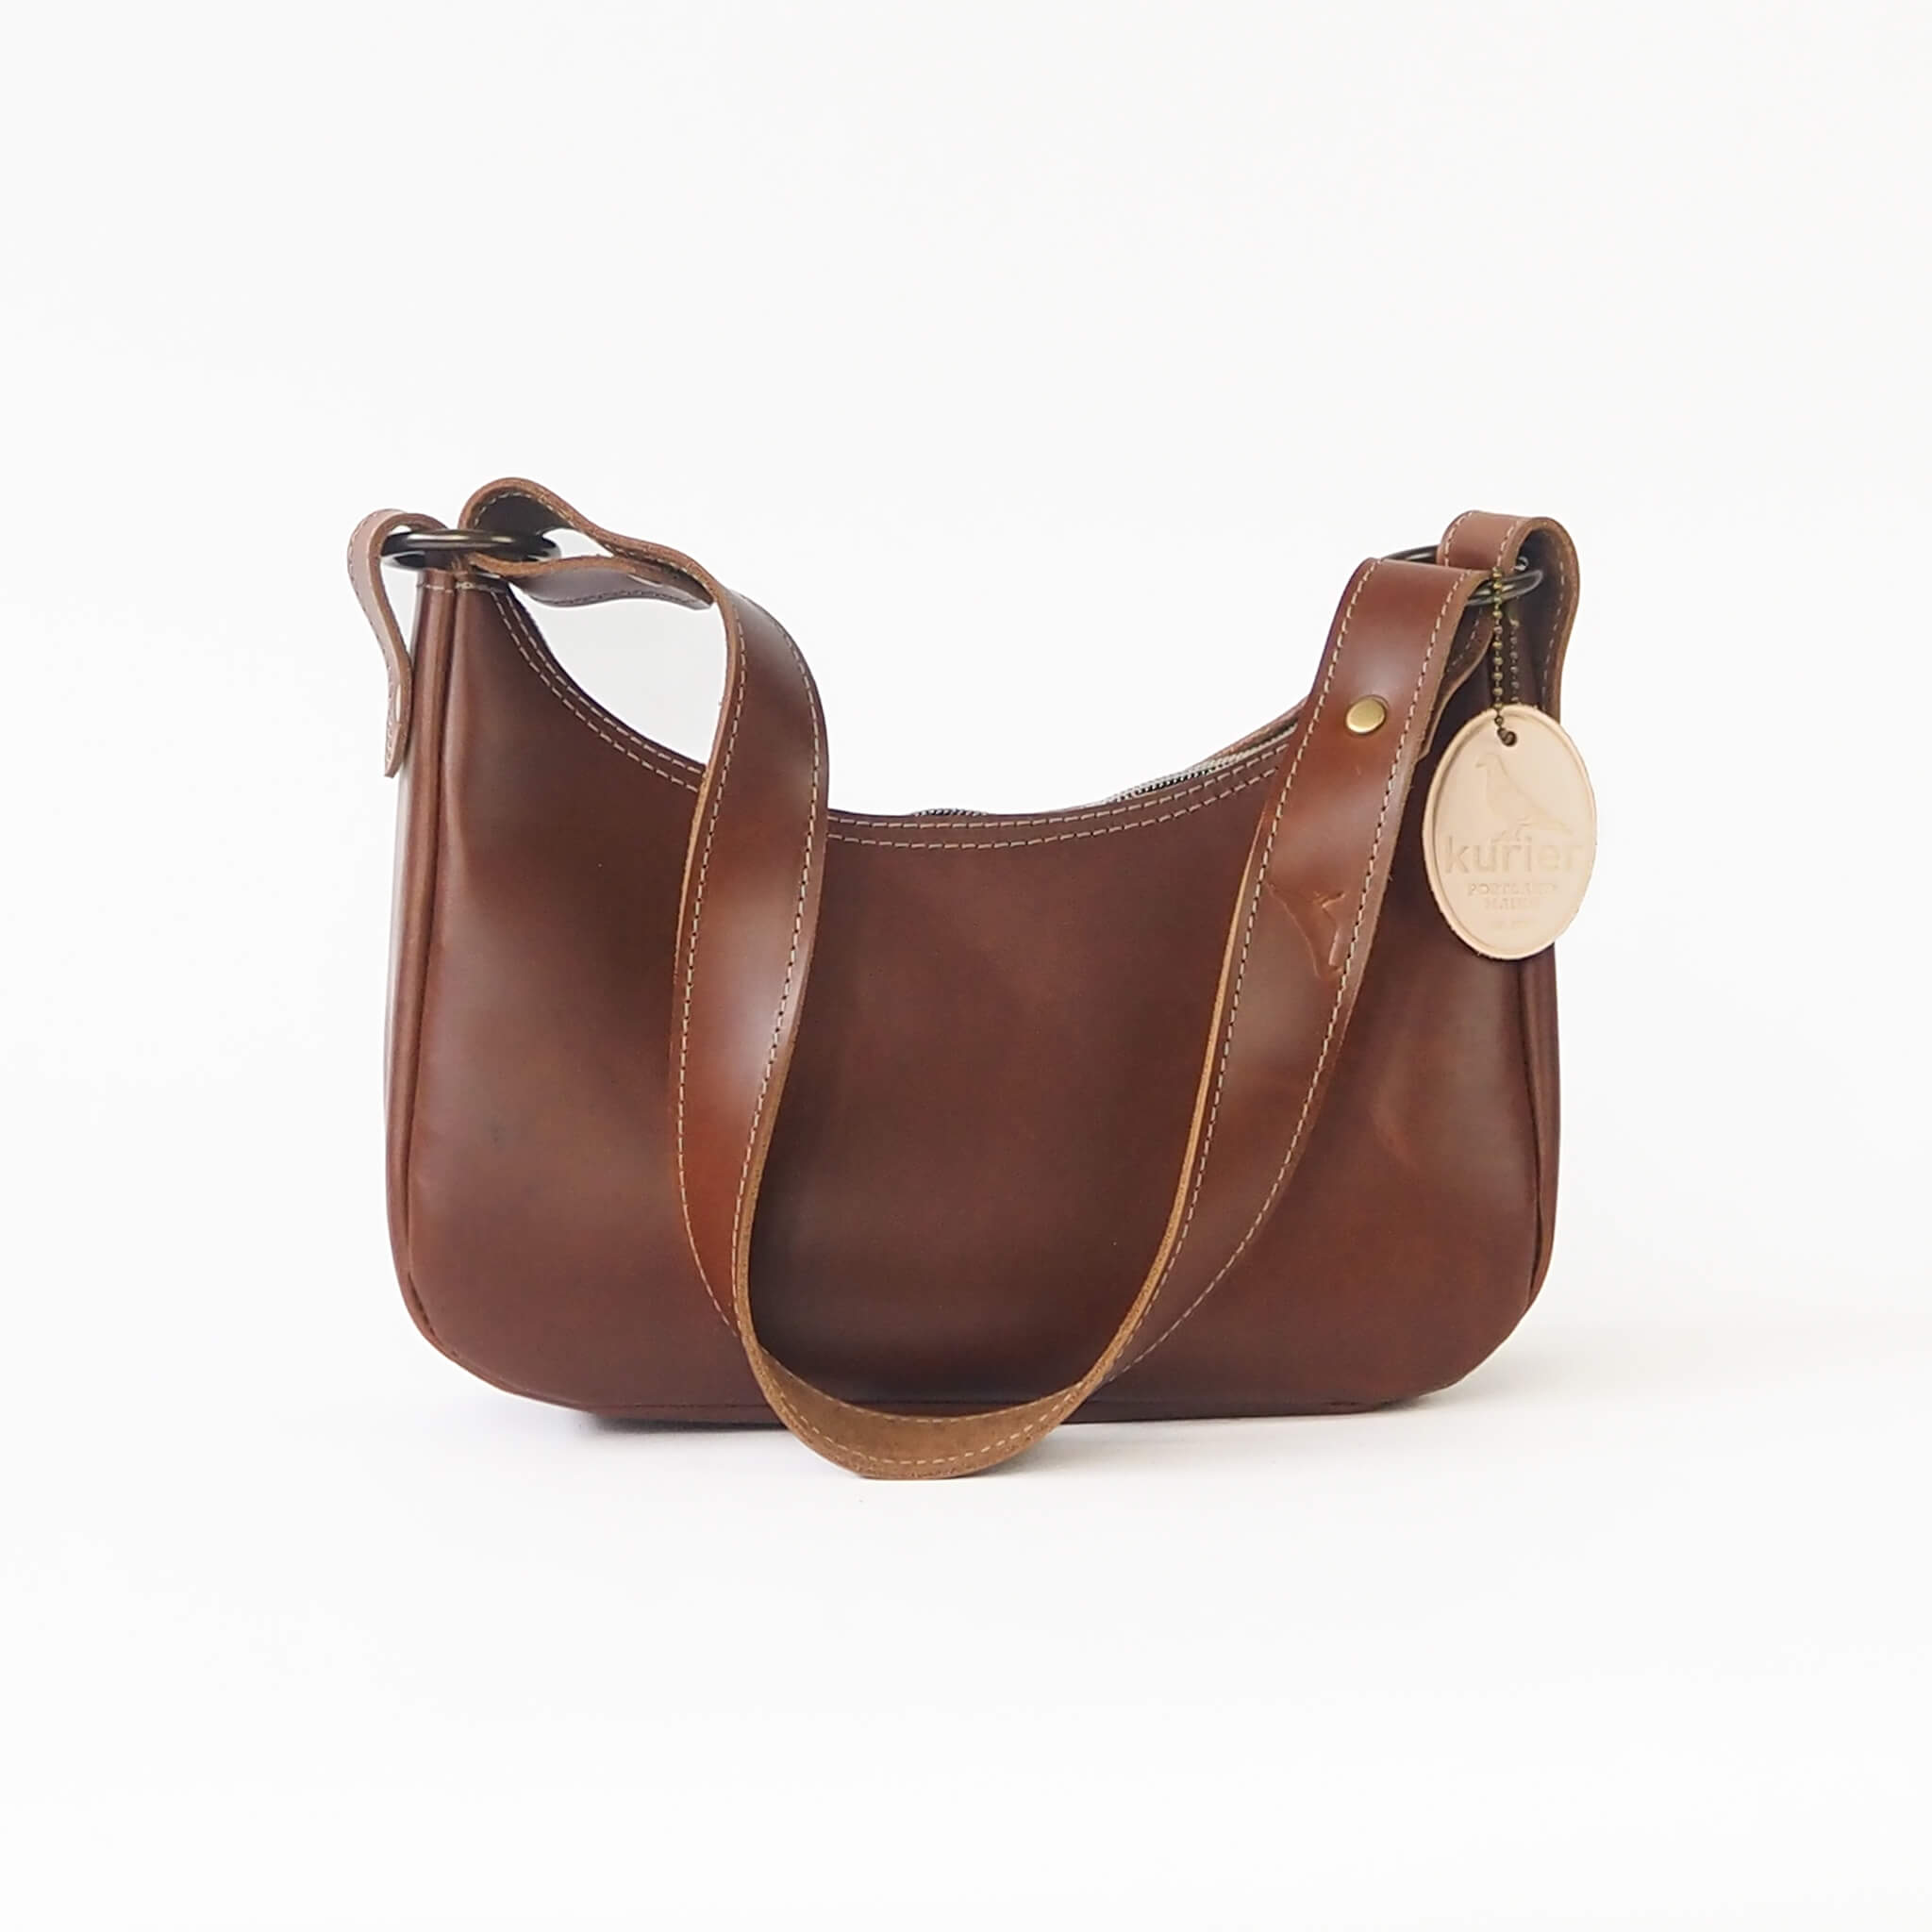 gigi handbag compact zipper handmade leather - pecan front view